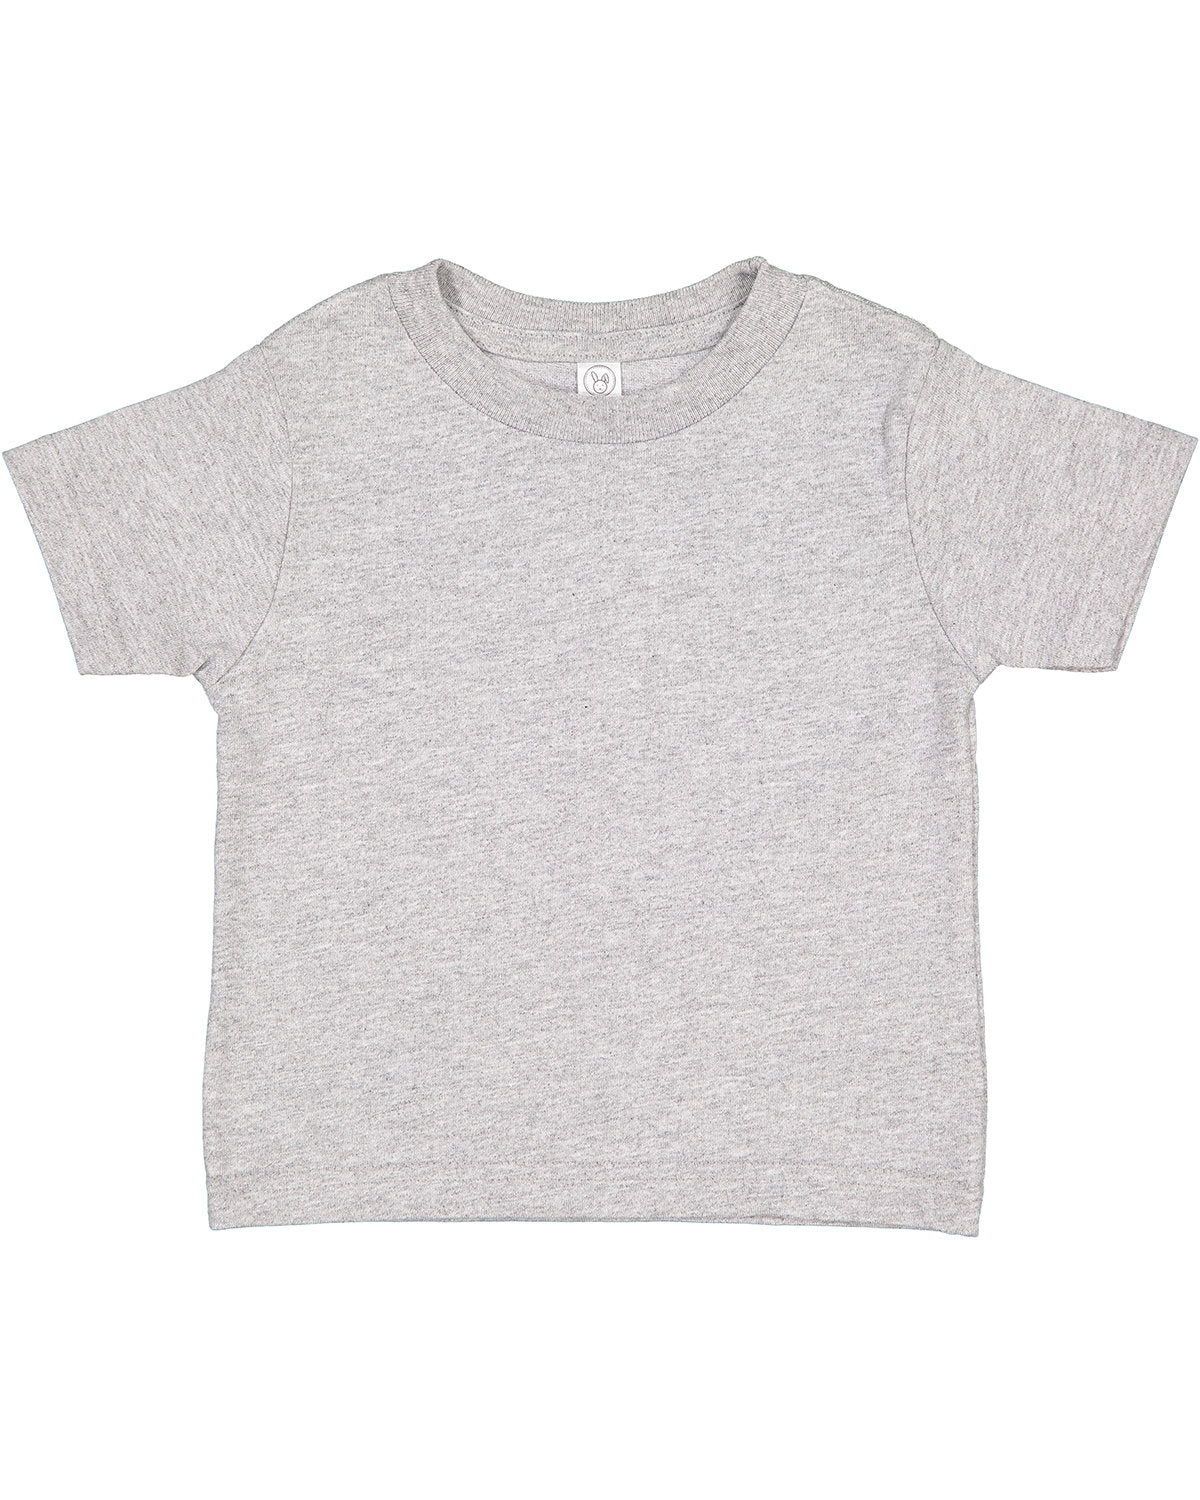 Rabbit Skins Toddler Cotton Jersey T-Shirt 2T / Heather